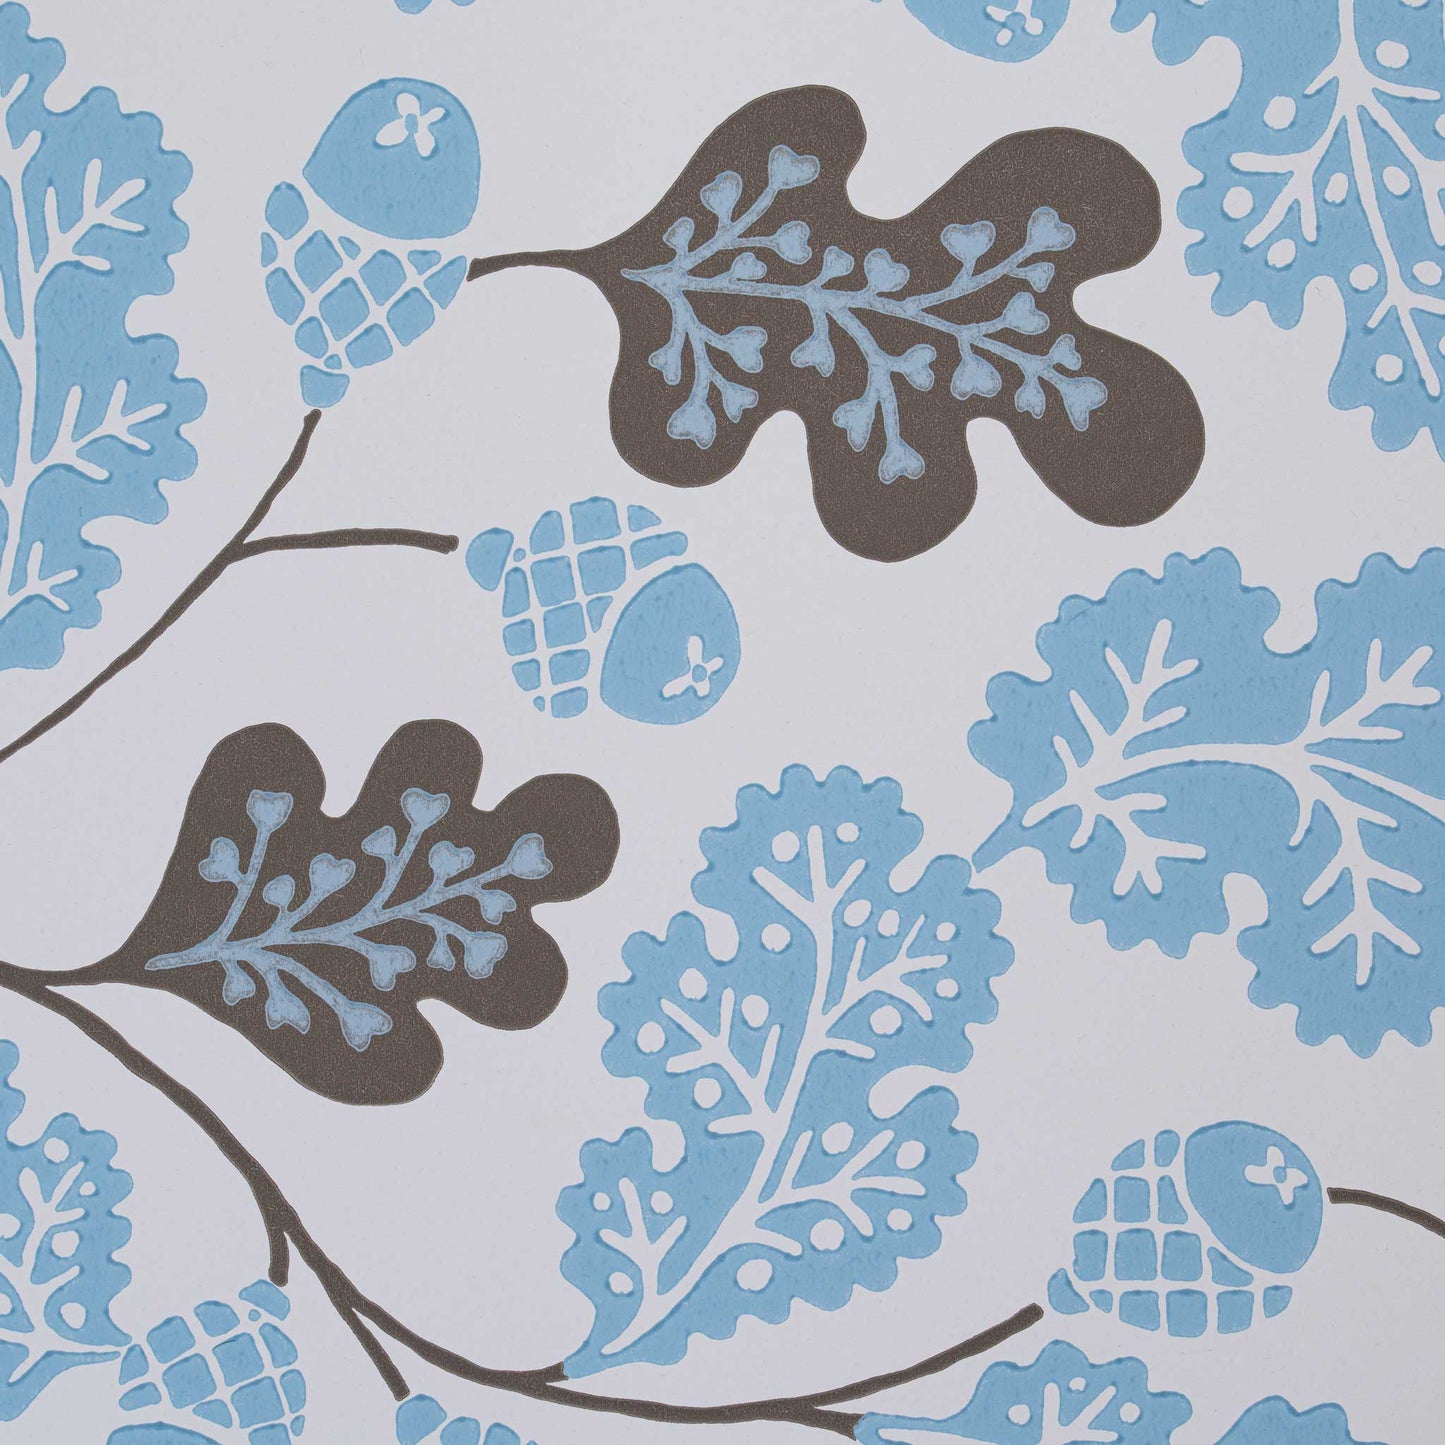 Acorn Wallpaper in Sugarbag Blue and Mushroom